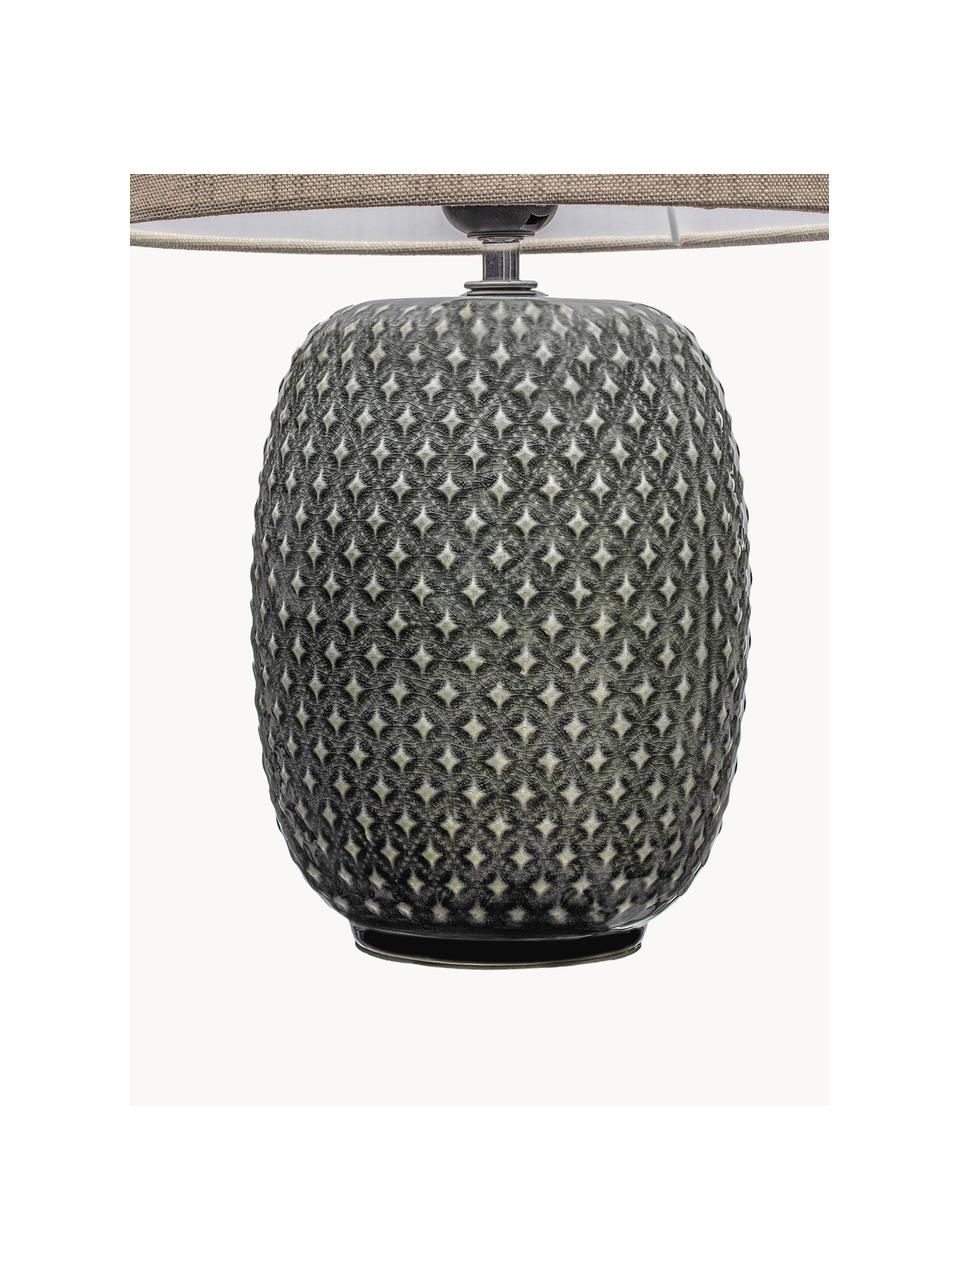 Keramik-Tischlampe Pretty Classy, Lampenschirm: Stoff, Beige, Grau, Ø 25 x H 40 cm